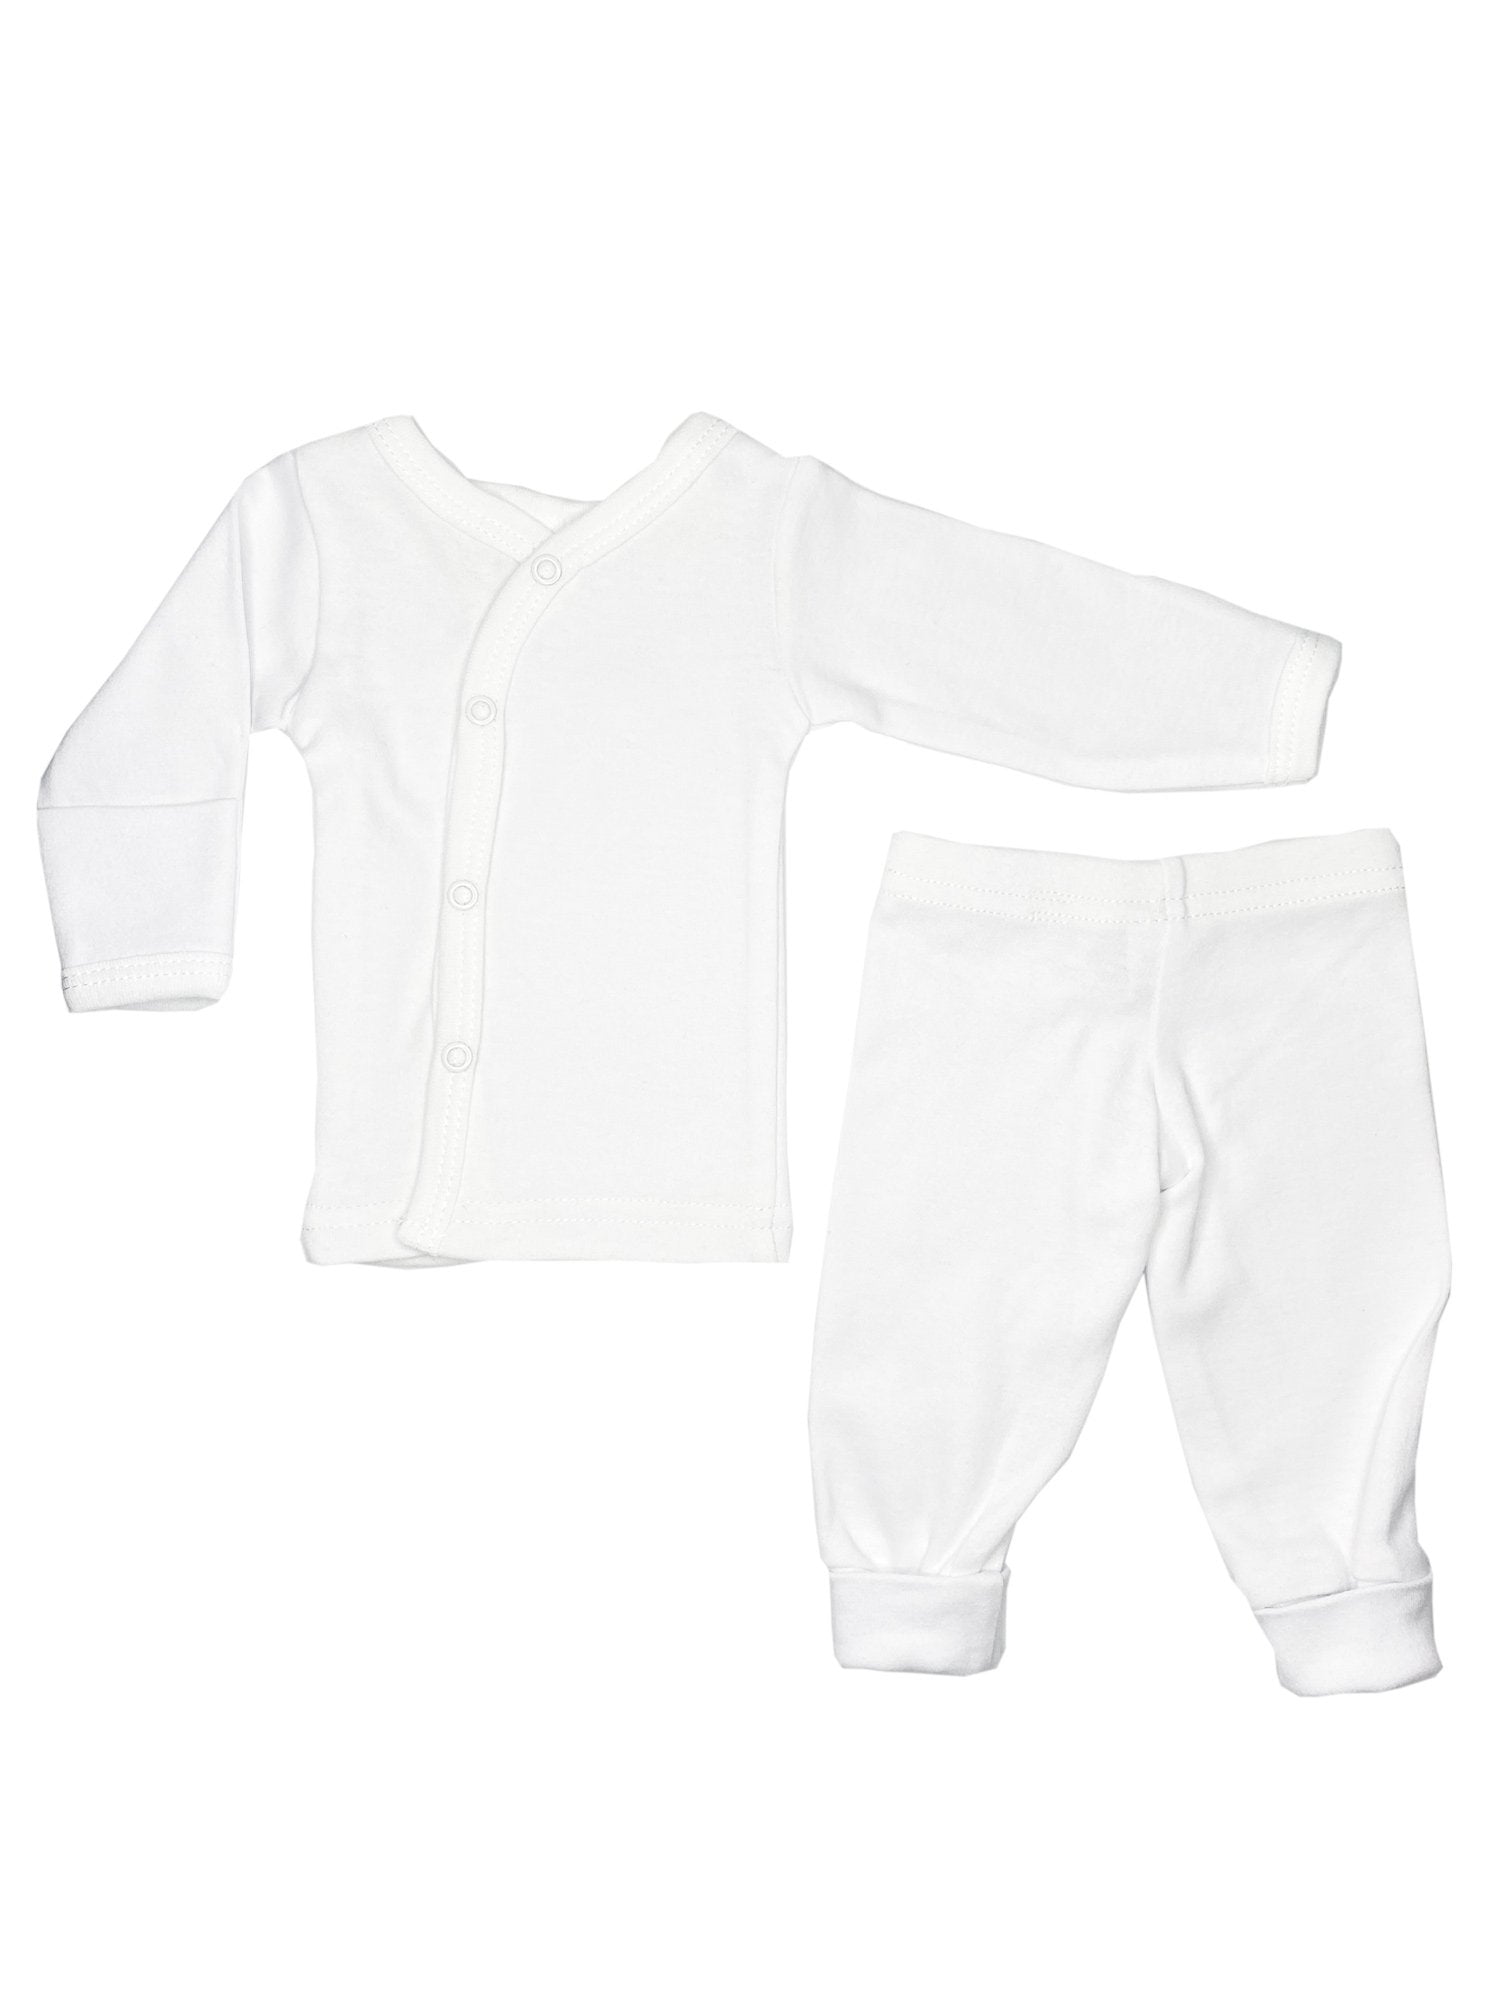 Classic White 4 piece set - Vest, Top, Trousers & Hat (4-7lbs) - Set - Soft Touch